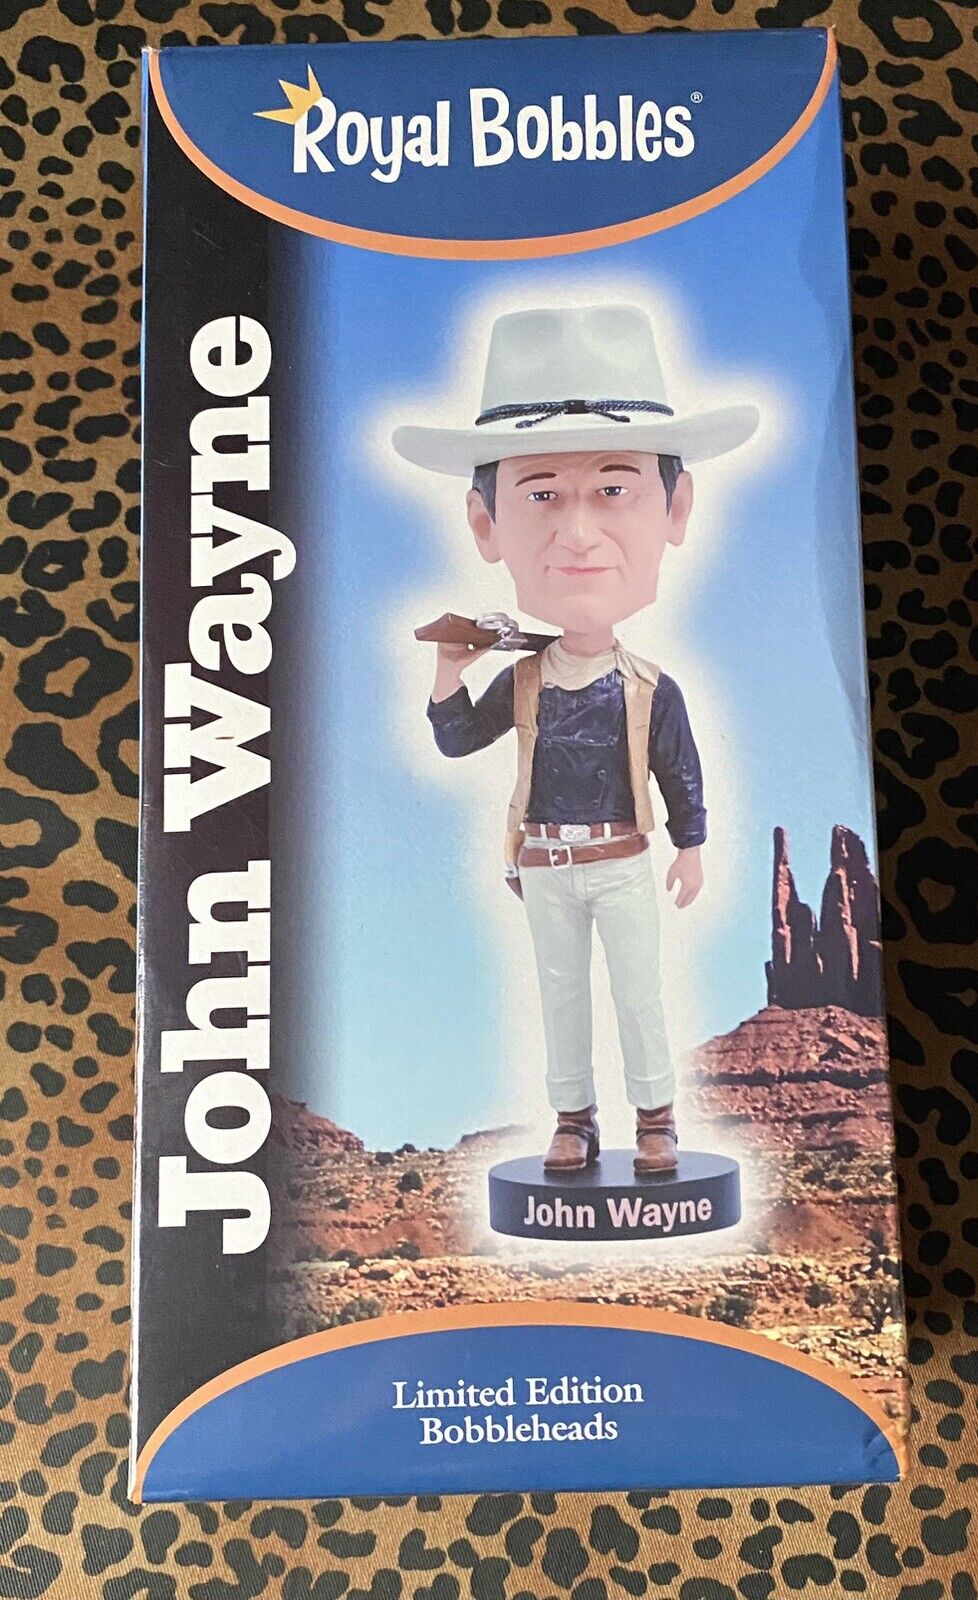 John Wayne Cowboy Bobblehead Limited Edition Royal Bobbles New